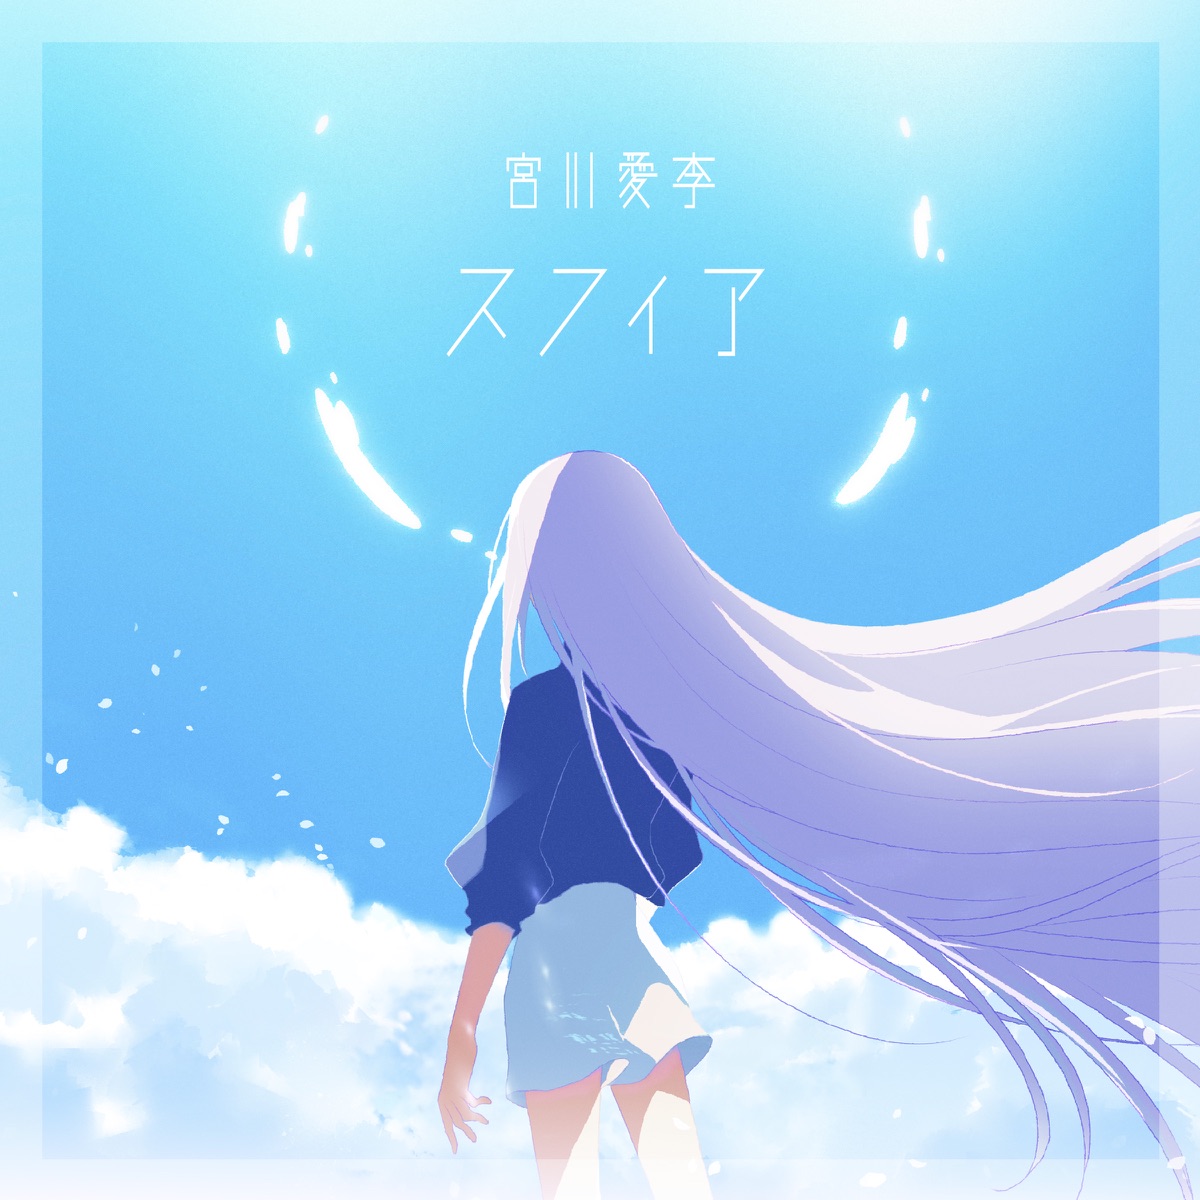 Cover art for『Airi Miyakawa - スフィア』from the release『Sphere